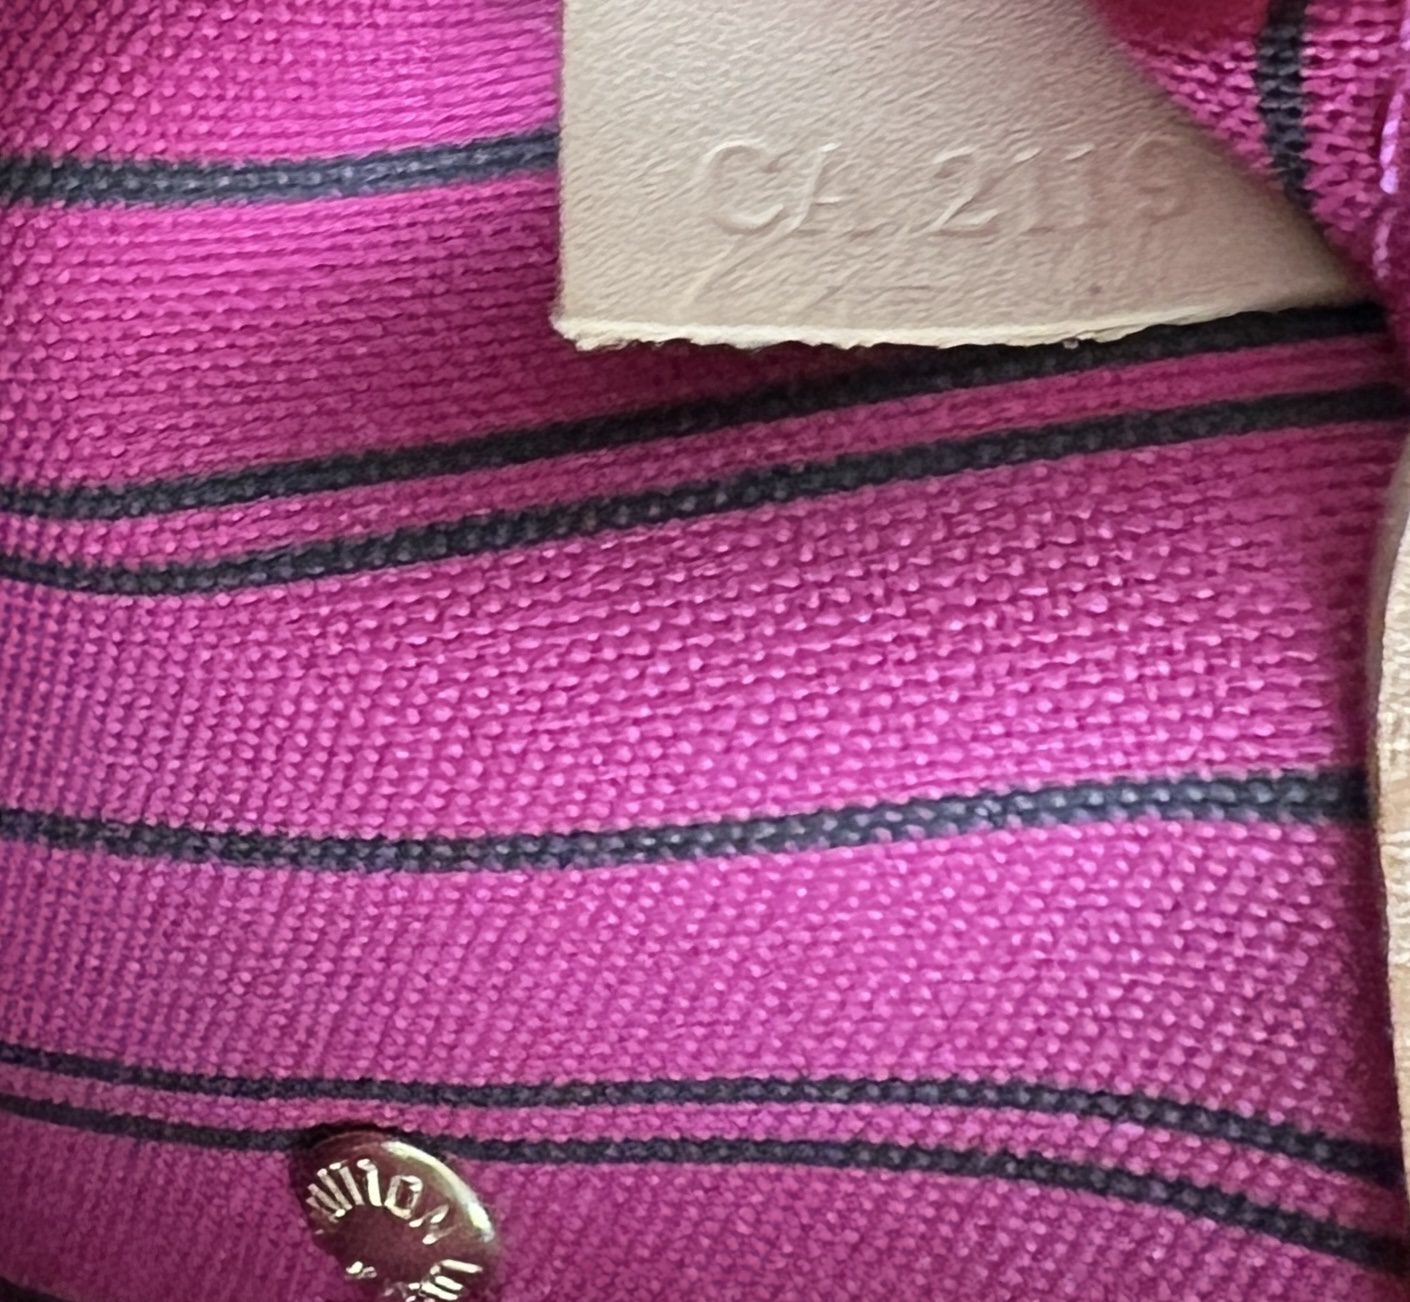 ❣️BNIB❣️Louis Vuitton Neverfull MM Monogram Pivoine Bag